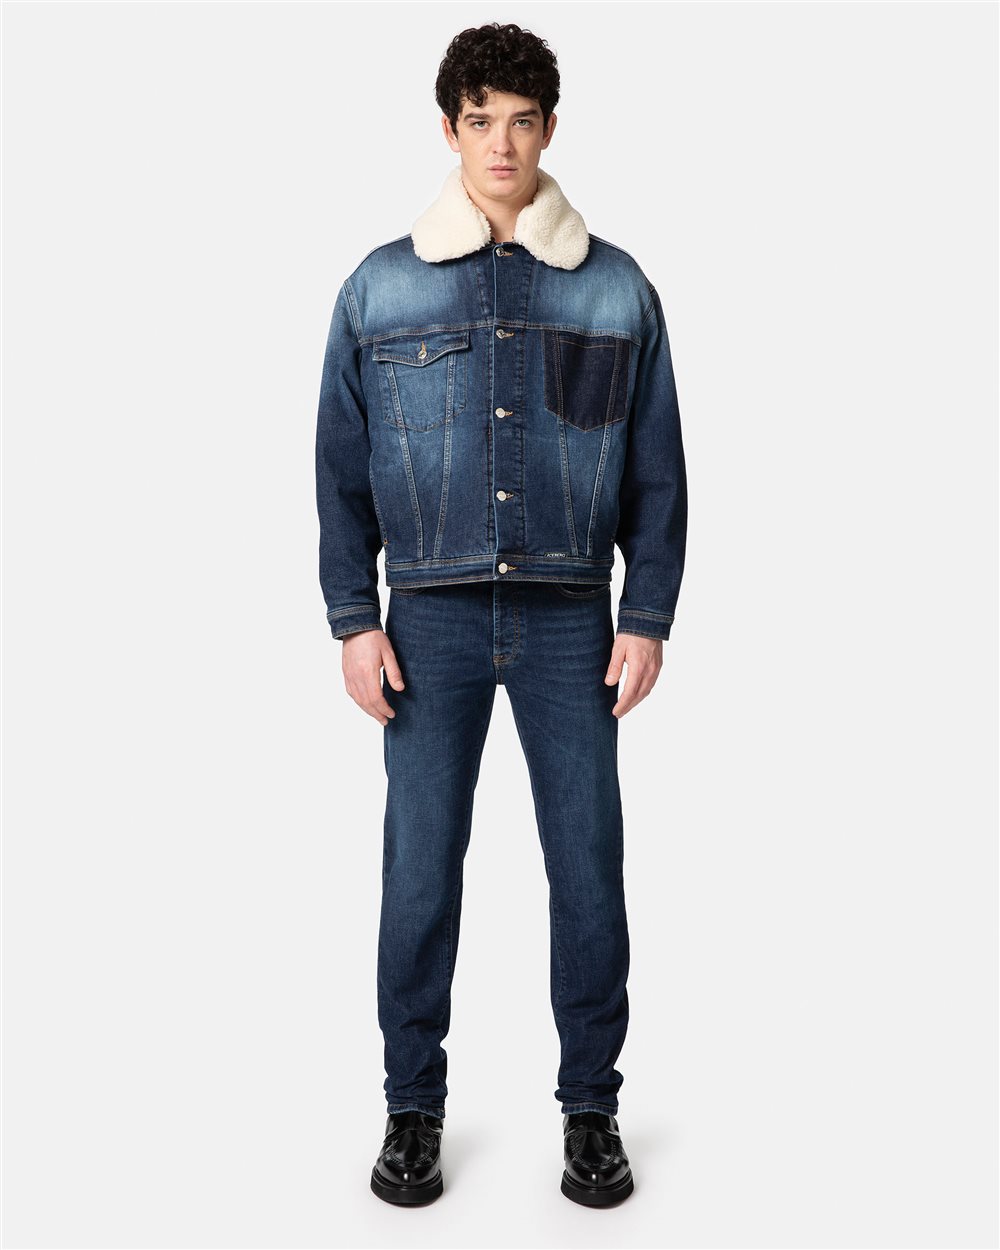 Classic 5-pocket blue jeans - Iceberg - Official Website